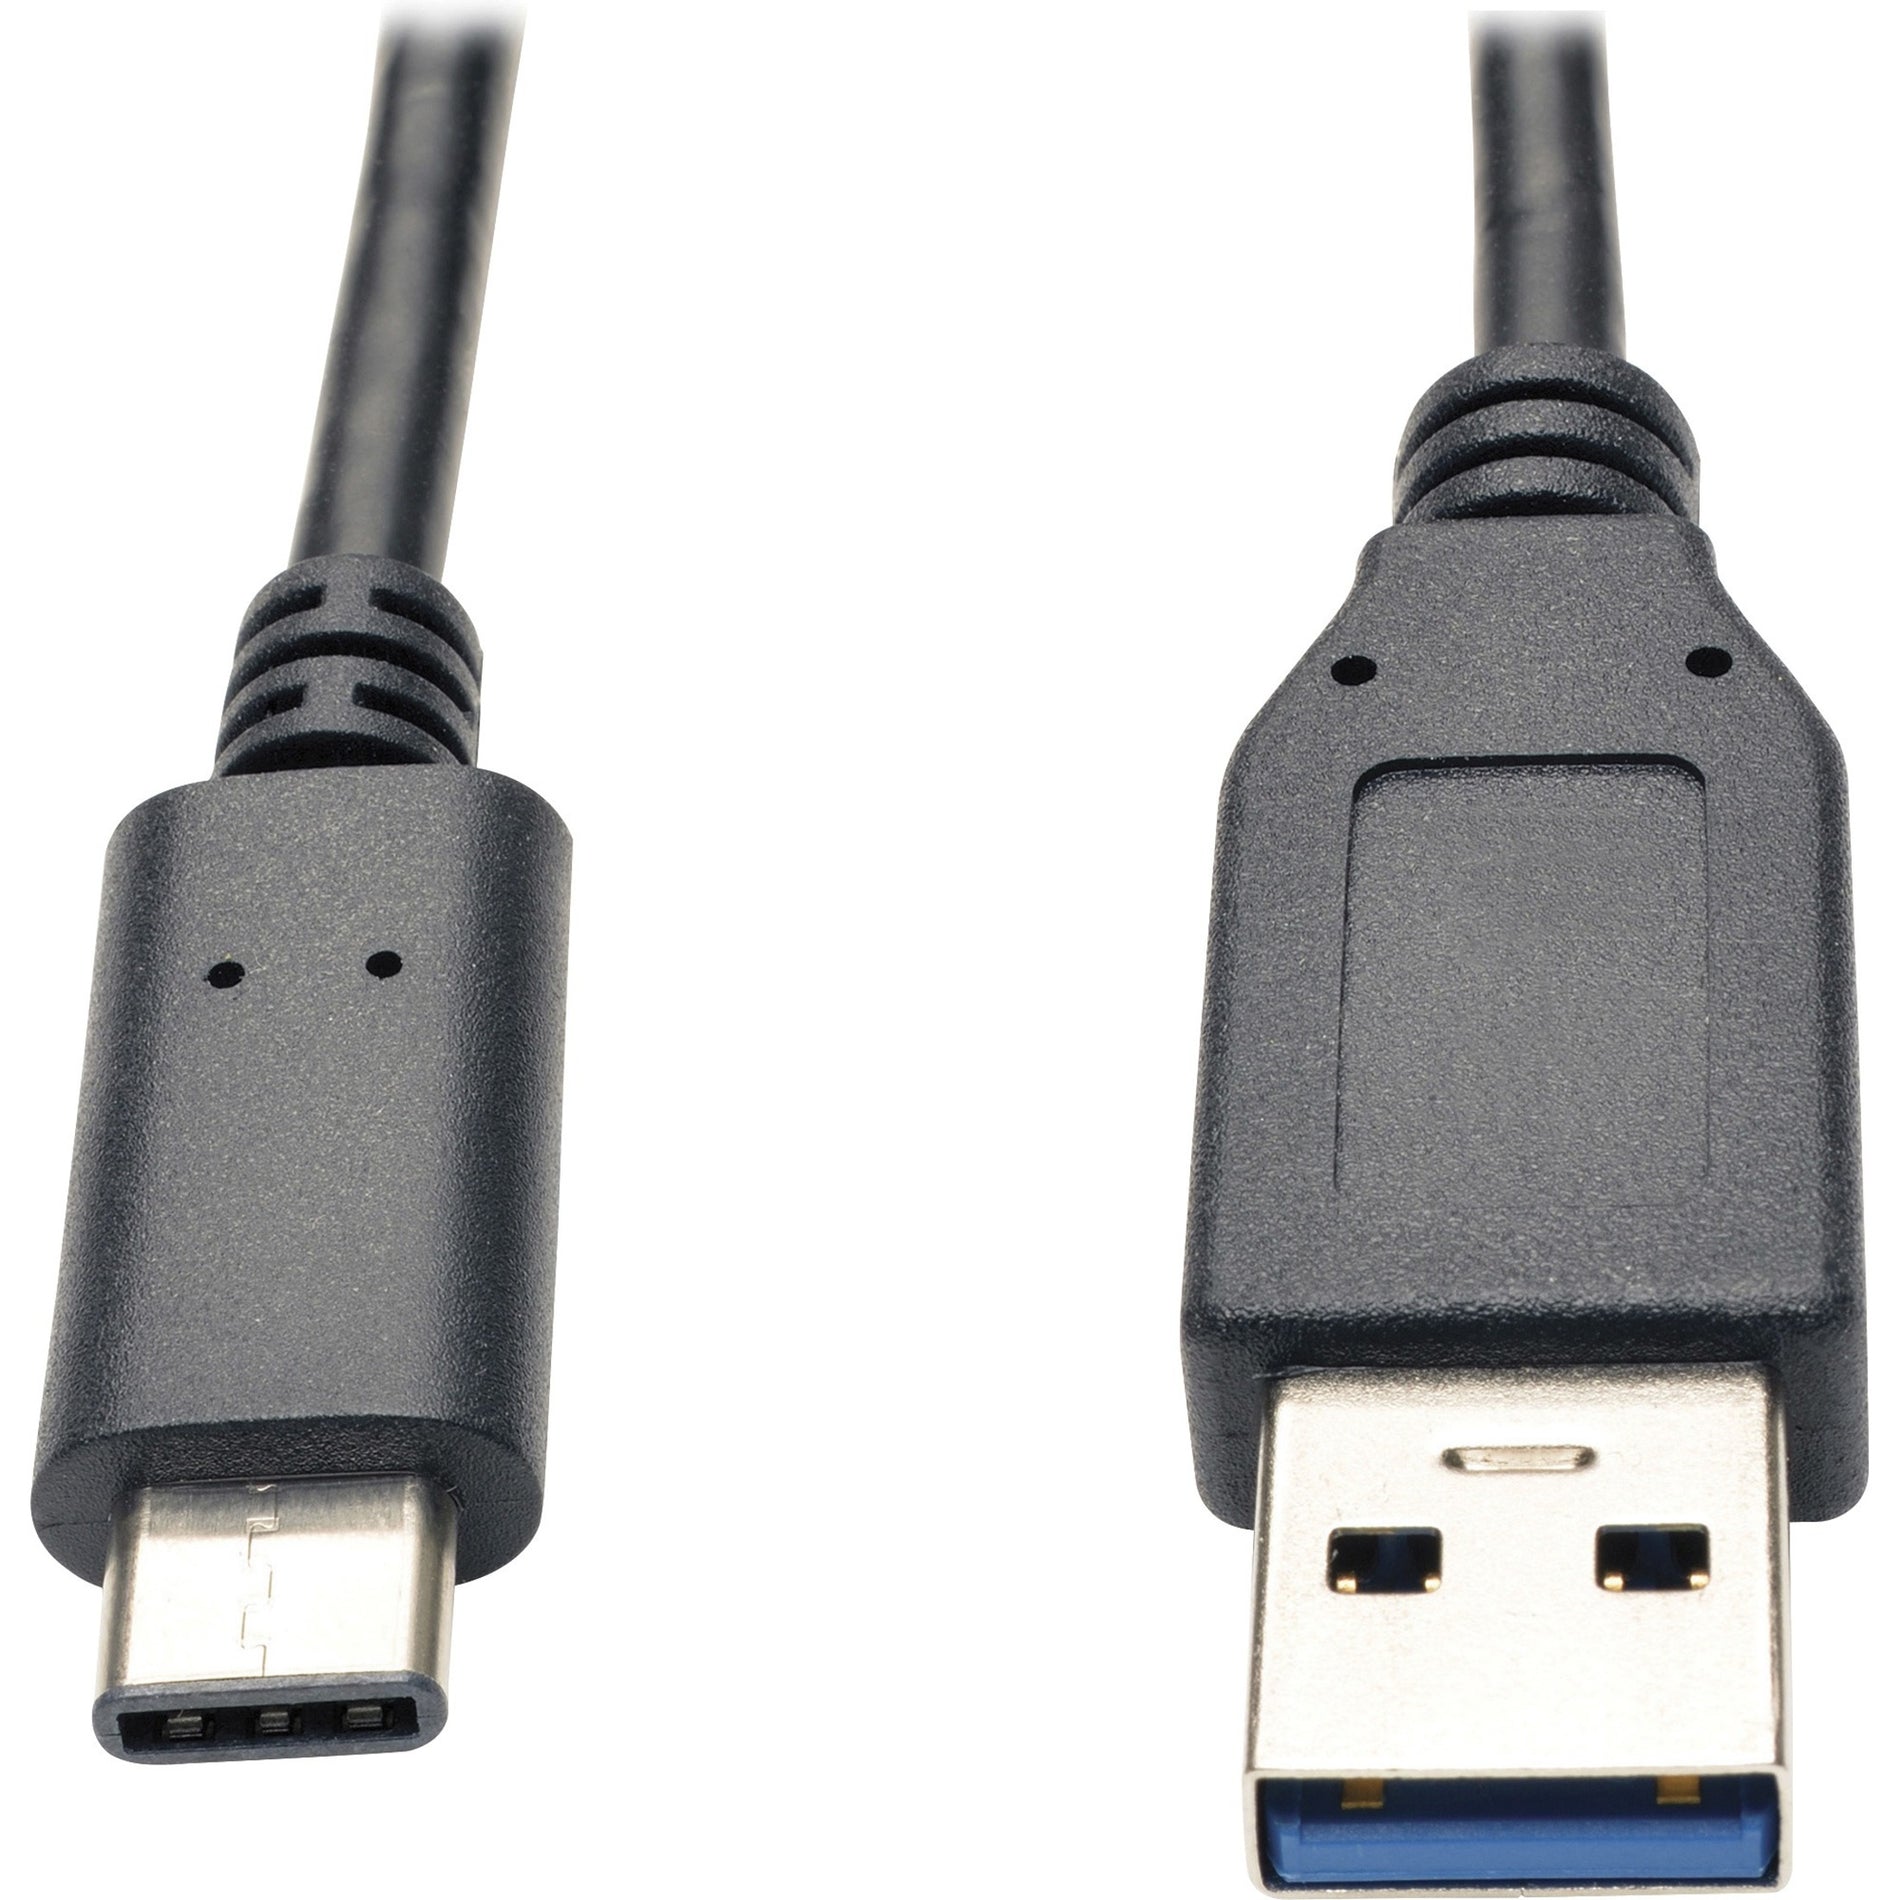 Tripp Lite U428-003 Cable de transferencia de datos USB USB 3.1 Tipo-C a USB Tipo-A M/M 3 Pies. Marca Translate: Tripp Lite